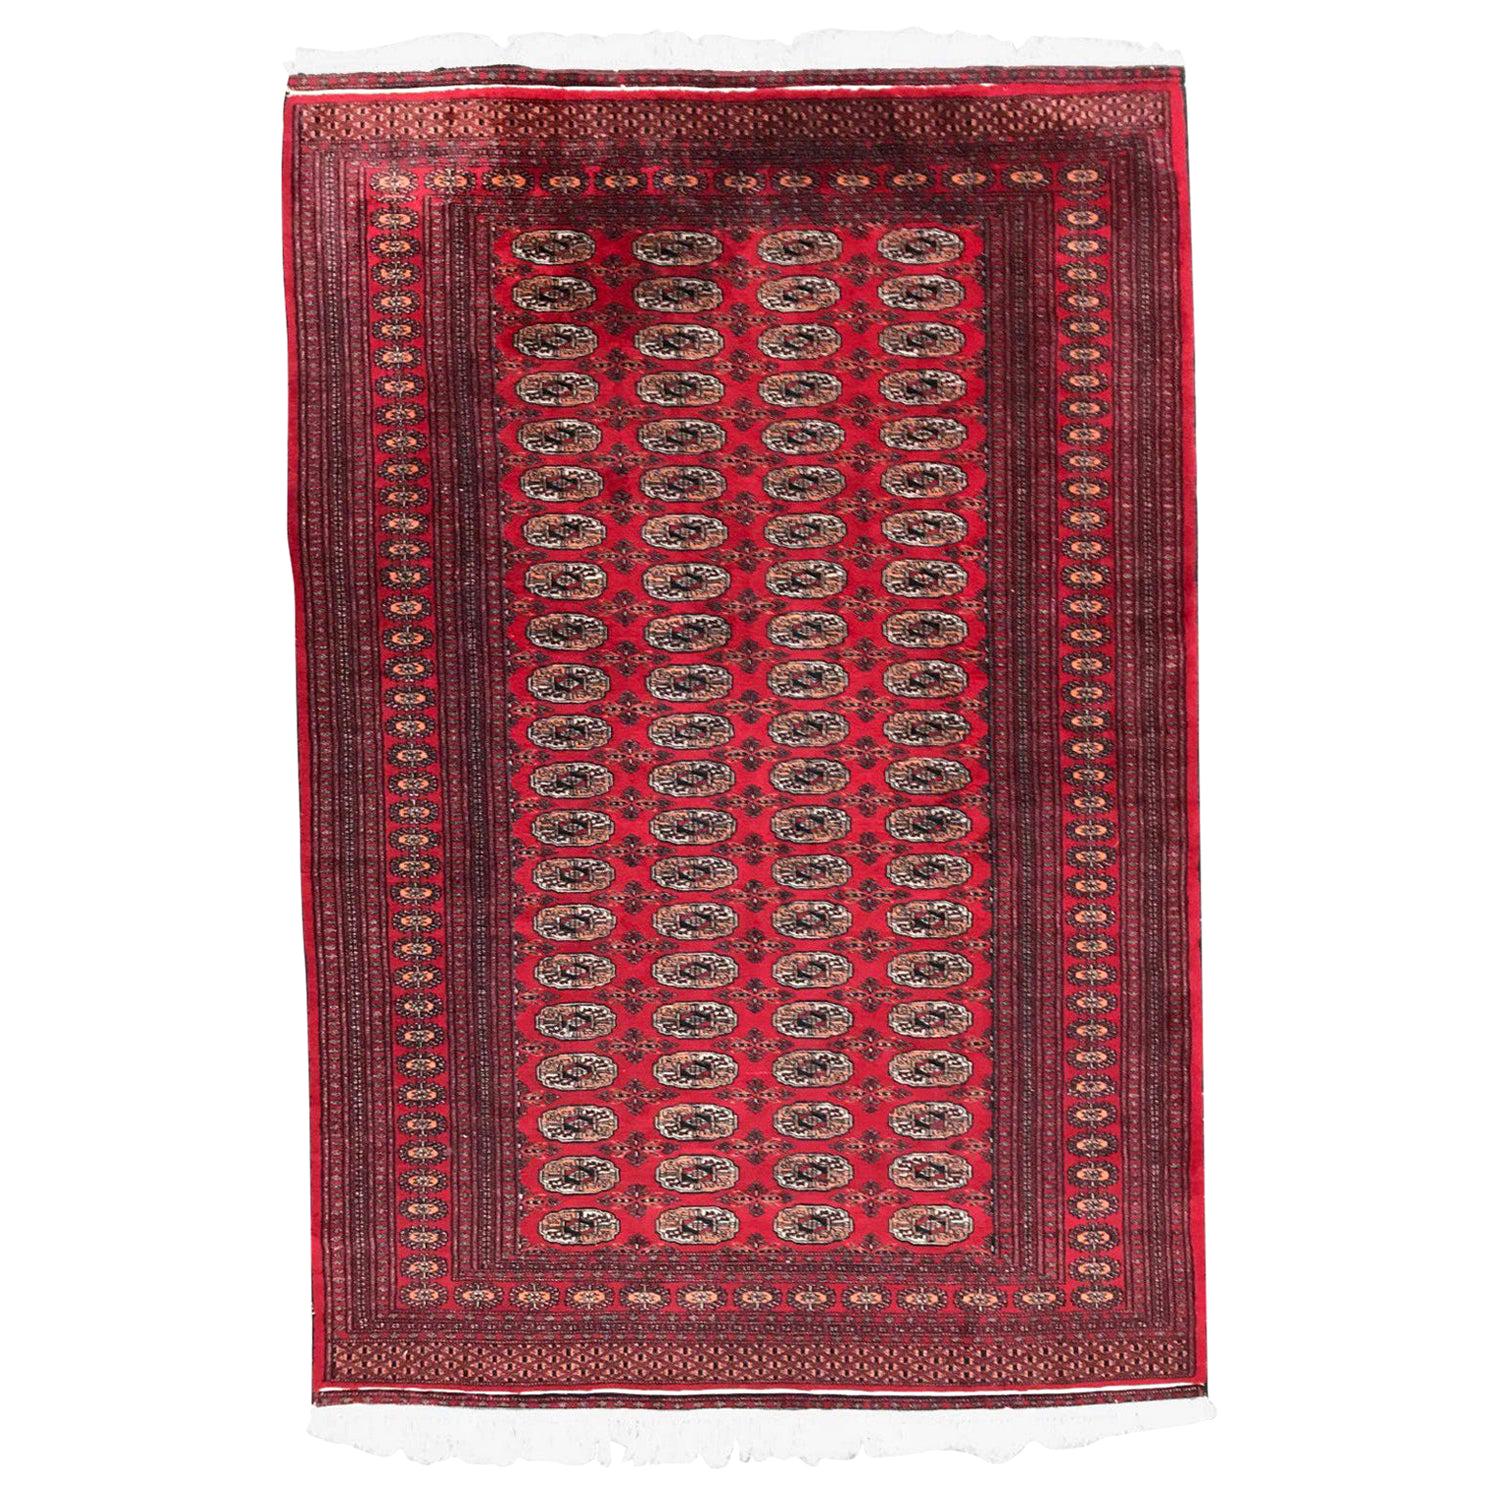 Bobyrug’s Beautiful Vintage Pakistani Rug Bokhara Design For Sale